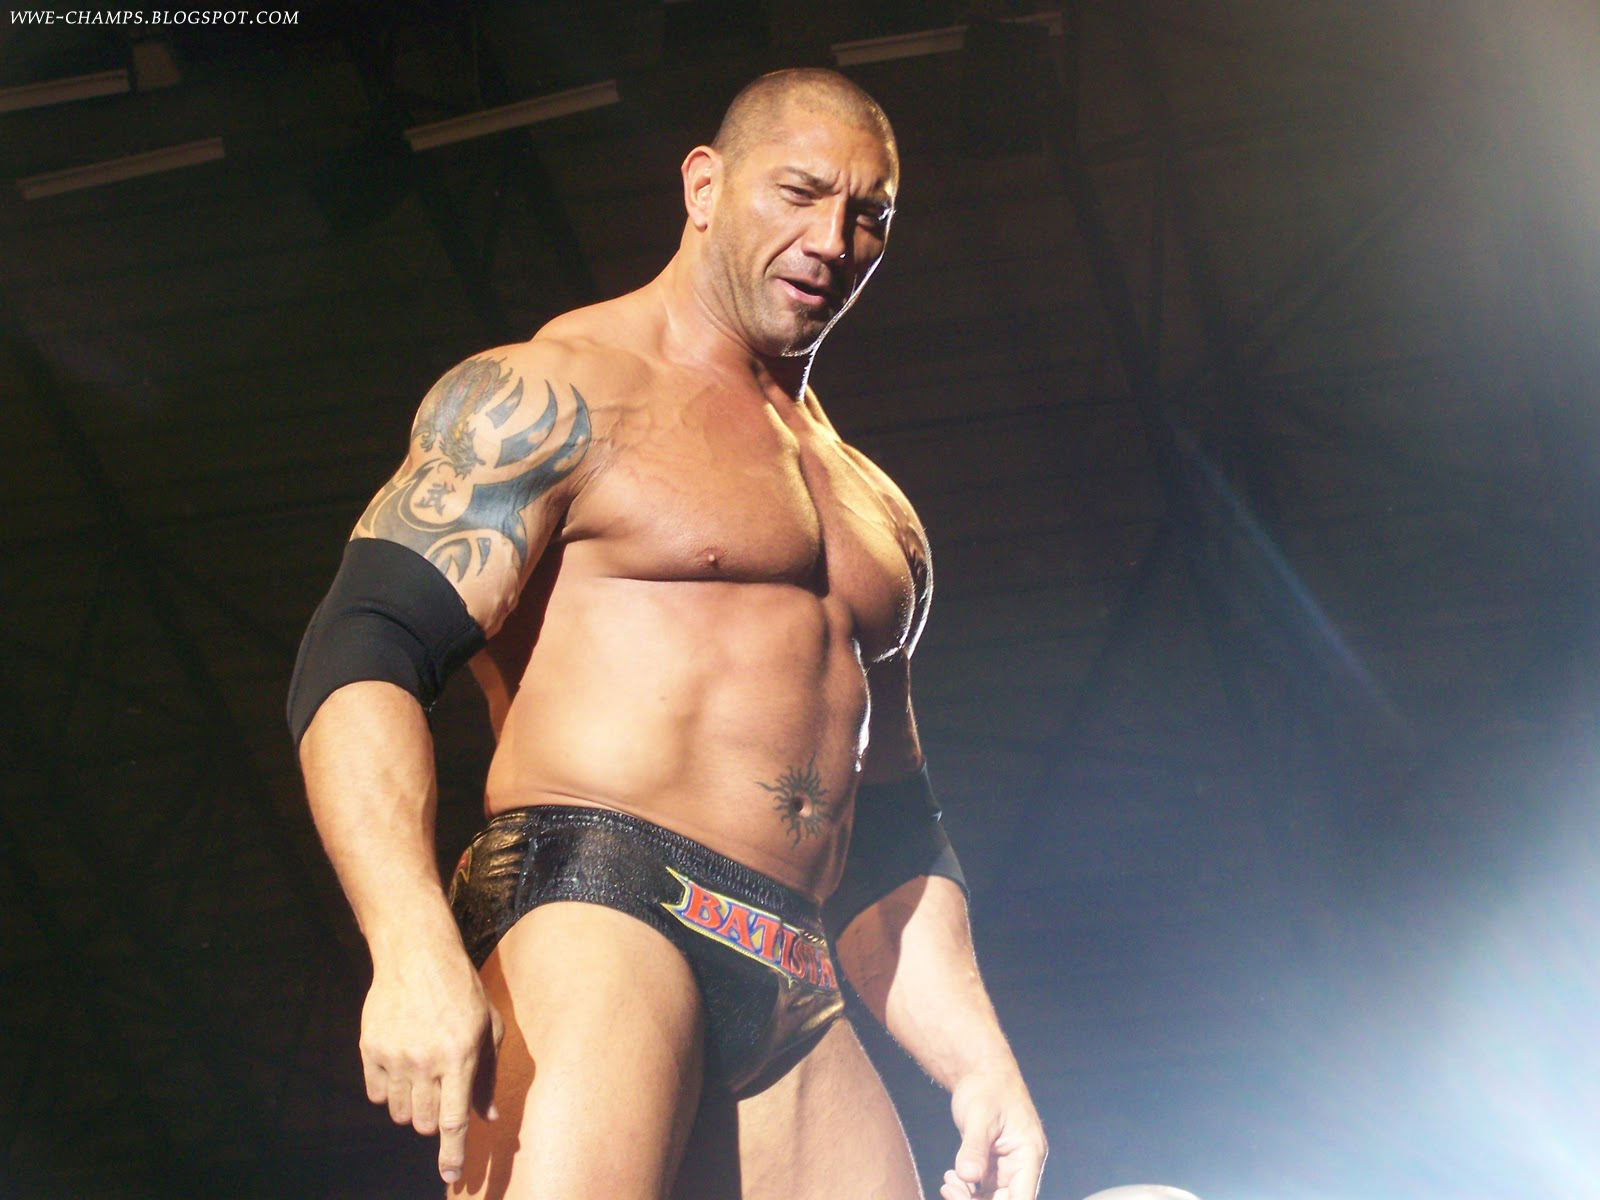 http://4.bp.blogspot.com/-7wPsdW9p2yU/TdpyKiJ9xKI/AAAAAAAAAz4/l9EMcHY6QUc/s1600/WWE_Batista_by_wwffansmh+copy.jpg